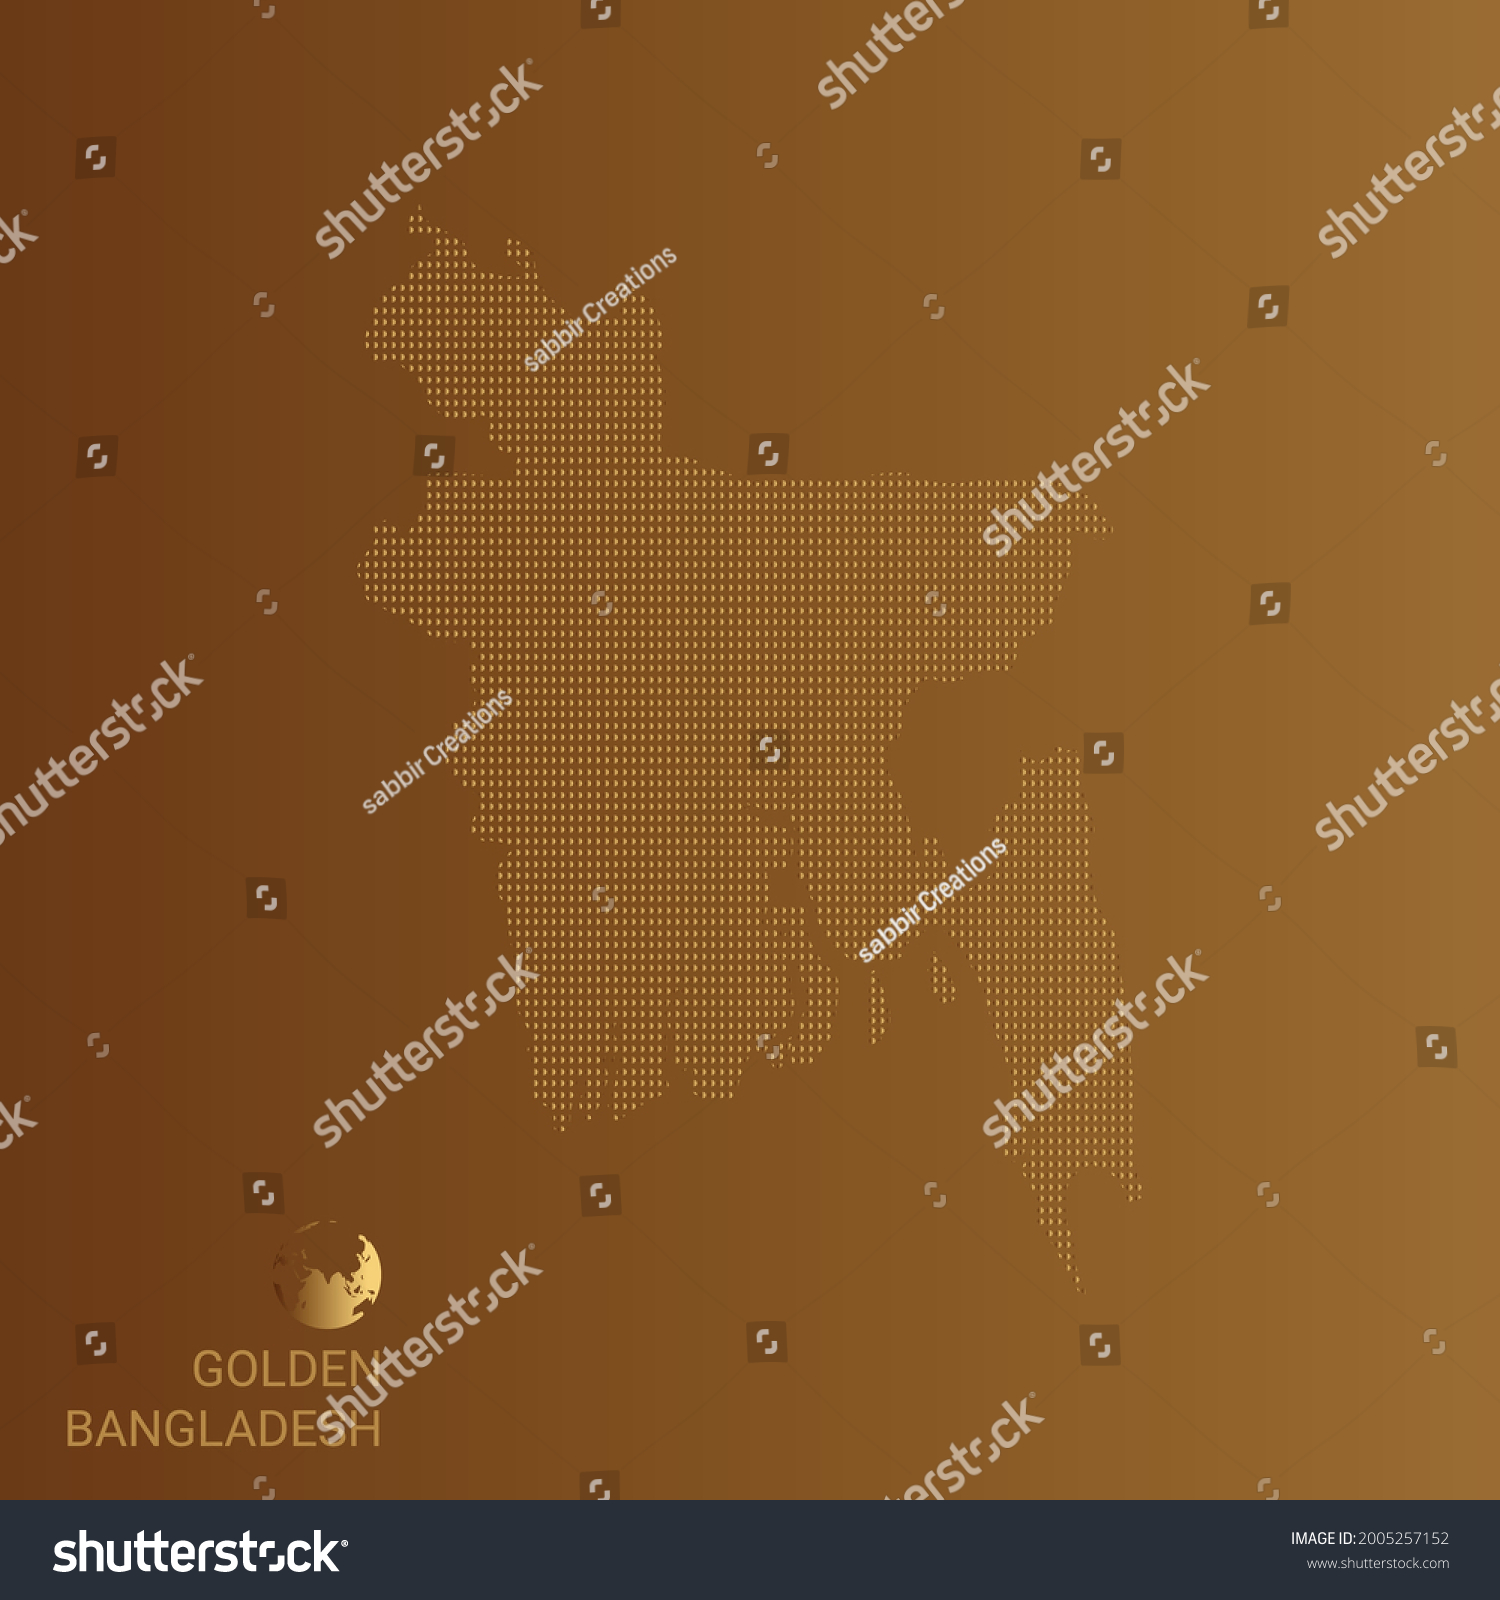 Bangladesh Dot Golden Map vector. Dhaka #2005257152